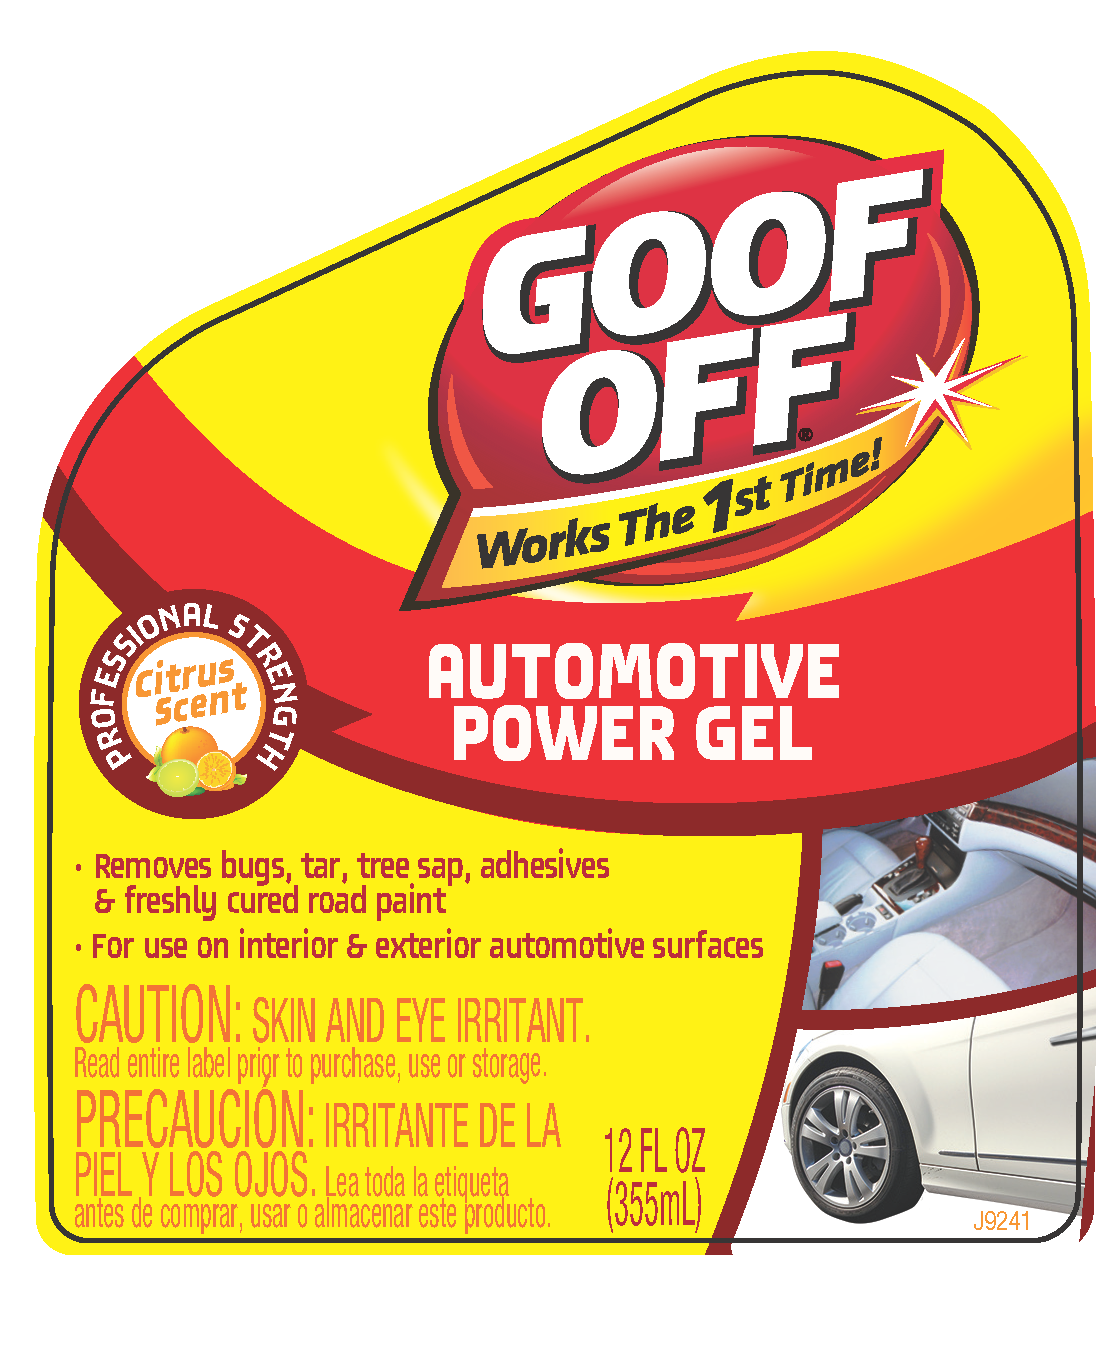 Automotive Power Gel - Goof Off